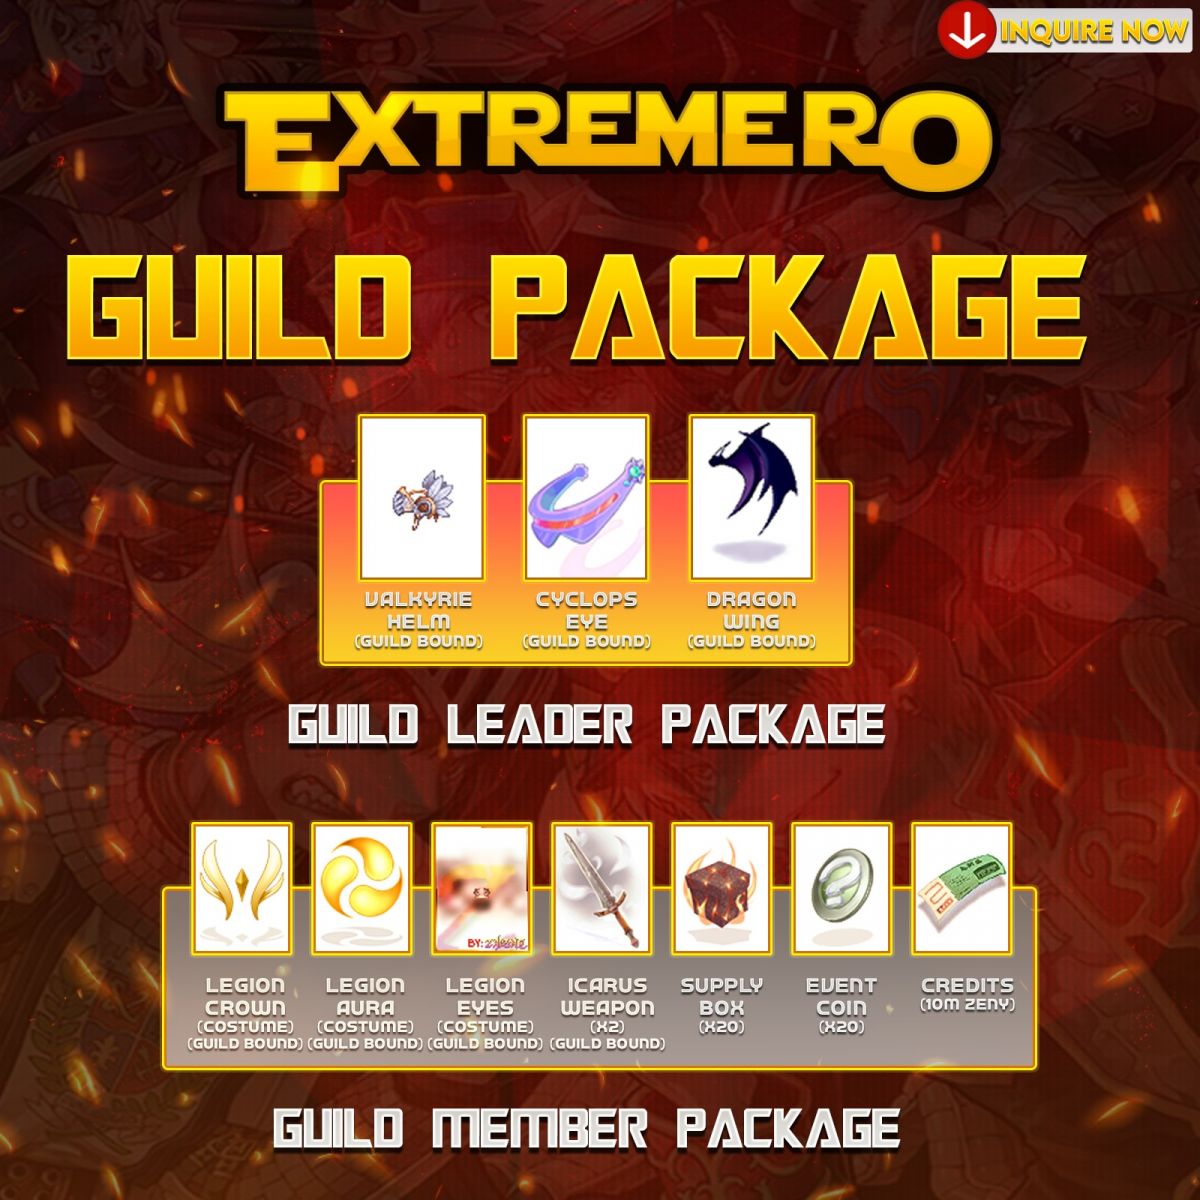 Extreme Ragnarok Package